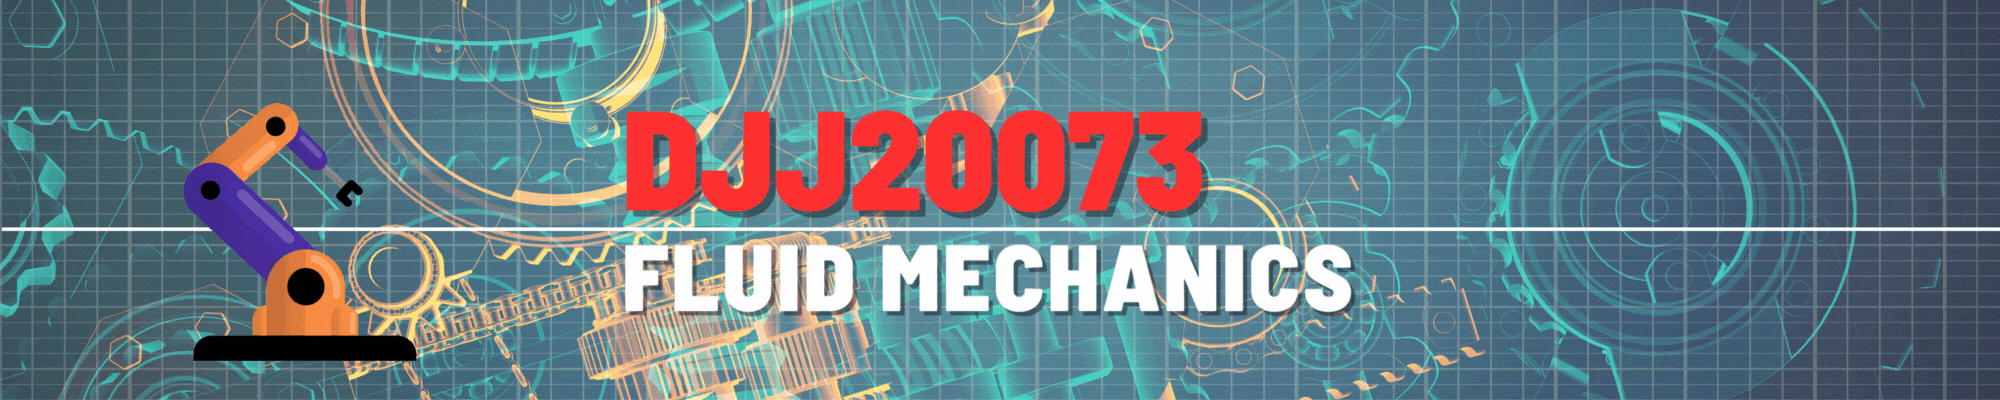 DJJ20073 FLUID MECHANICS